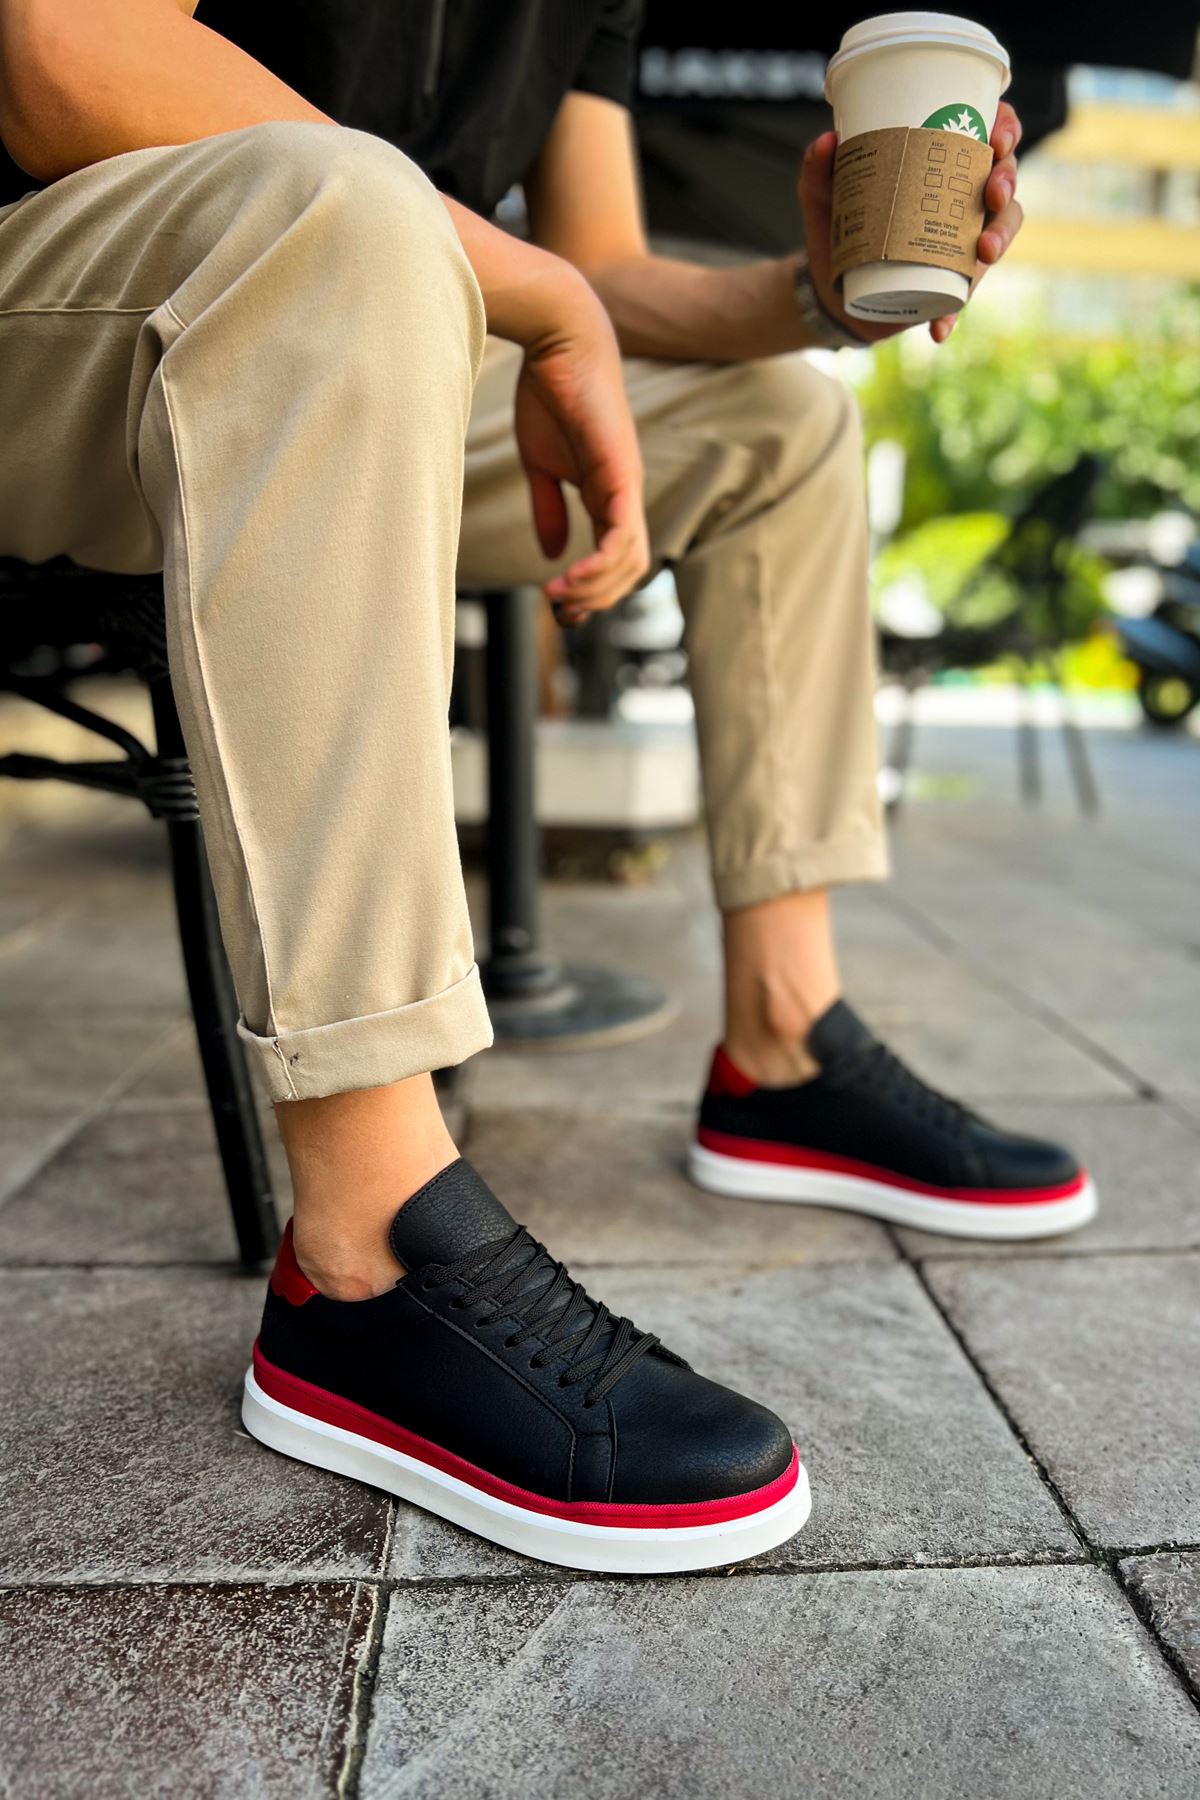 CH979 Santoni GBT Sport Men's Sneakers Shoes BLACK/RED - STREETMODE™